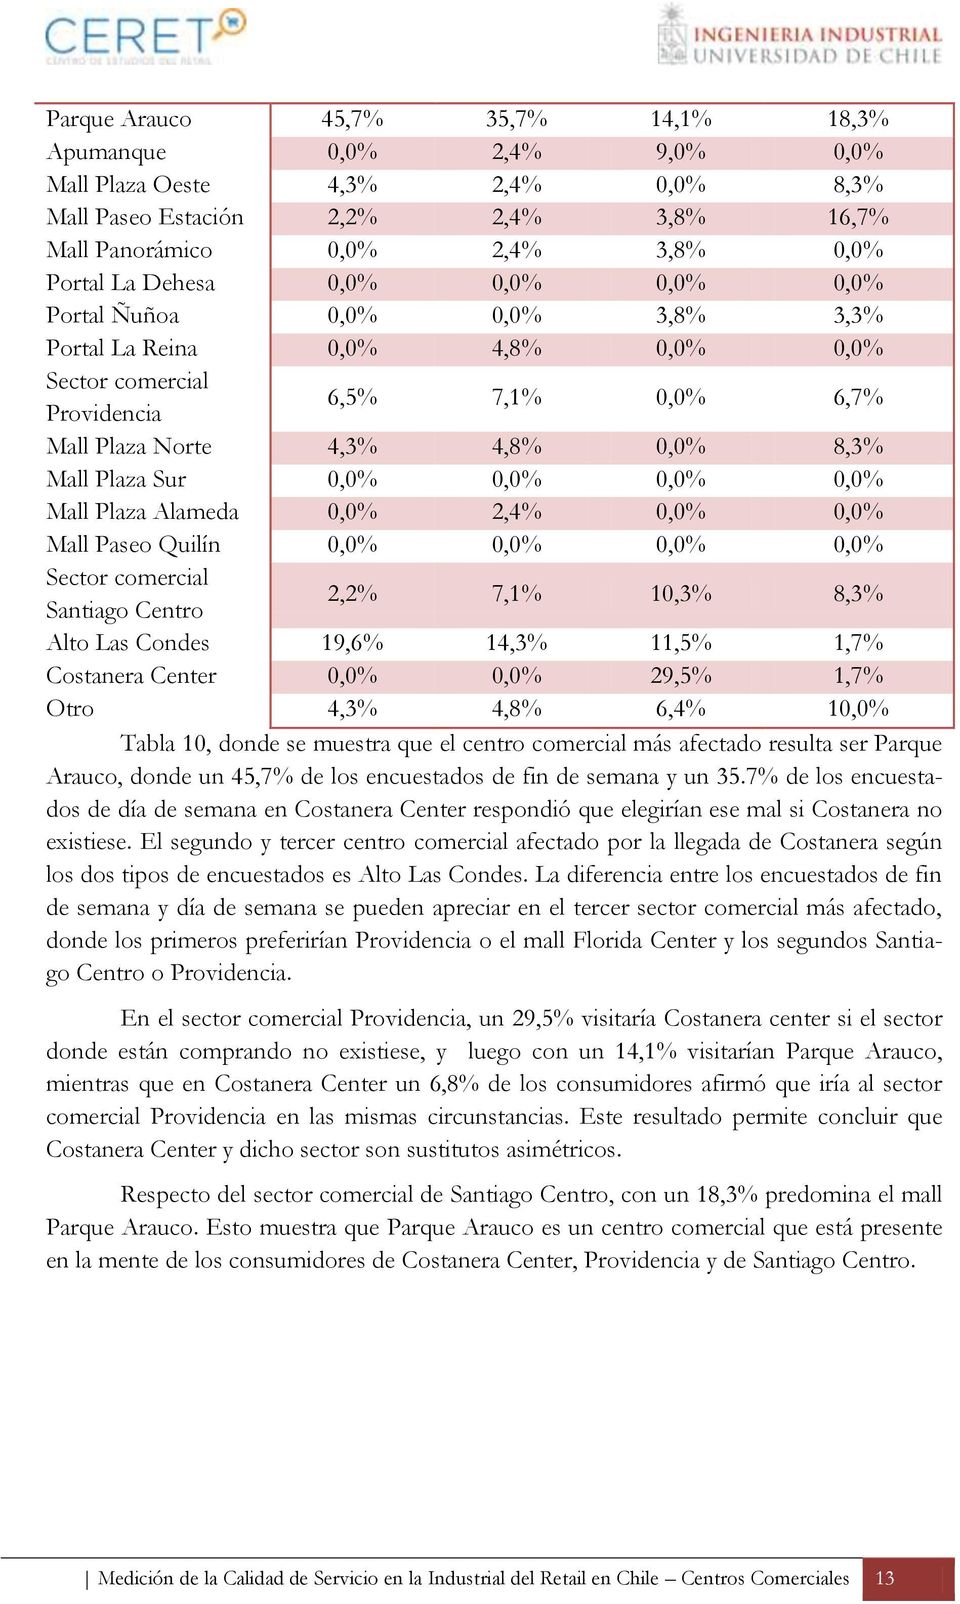 Mall Plaza Alameda 0,0% 2,4% 0,0% 0,0% Mall Paseo Quilín 0,0% 0,0% 0,0% 0,0% Sector comercial 2,2% 7,1% 10,3% 8,3% Alto Las Condes 19,6% 14,3% 11,5% 1,7% Costanera Center 0,0% 0,0% 29,5% 1,7% Otro